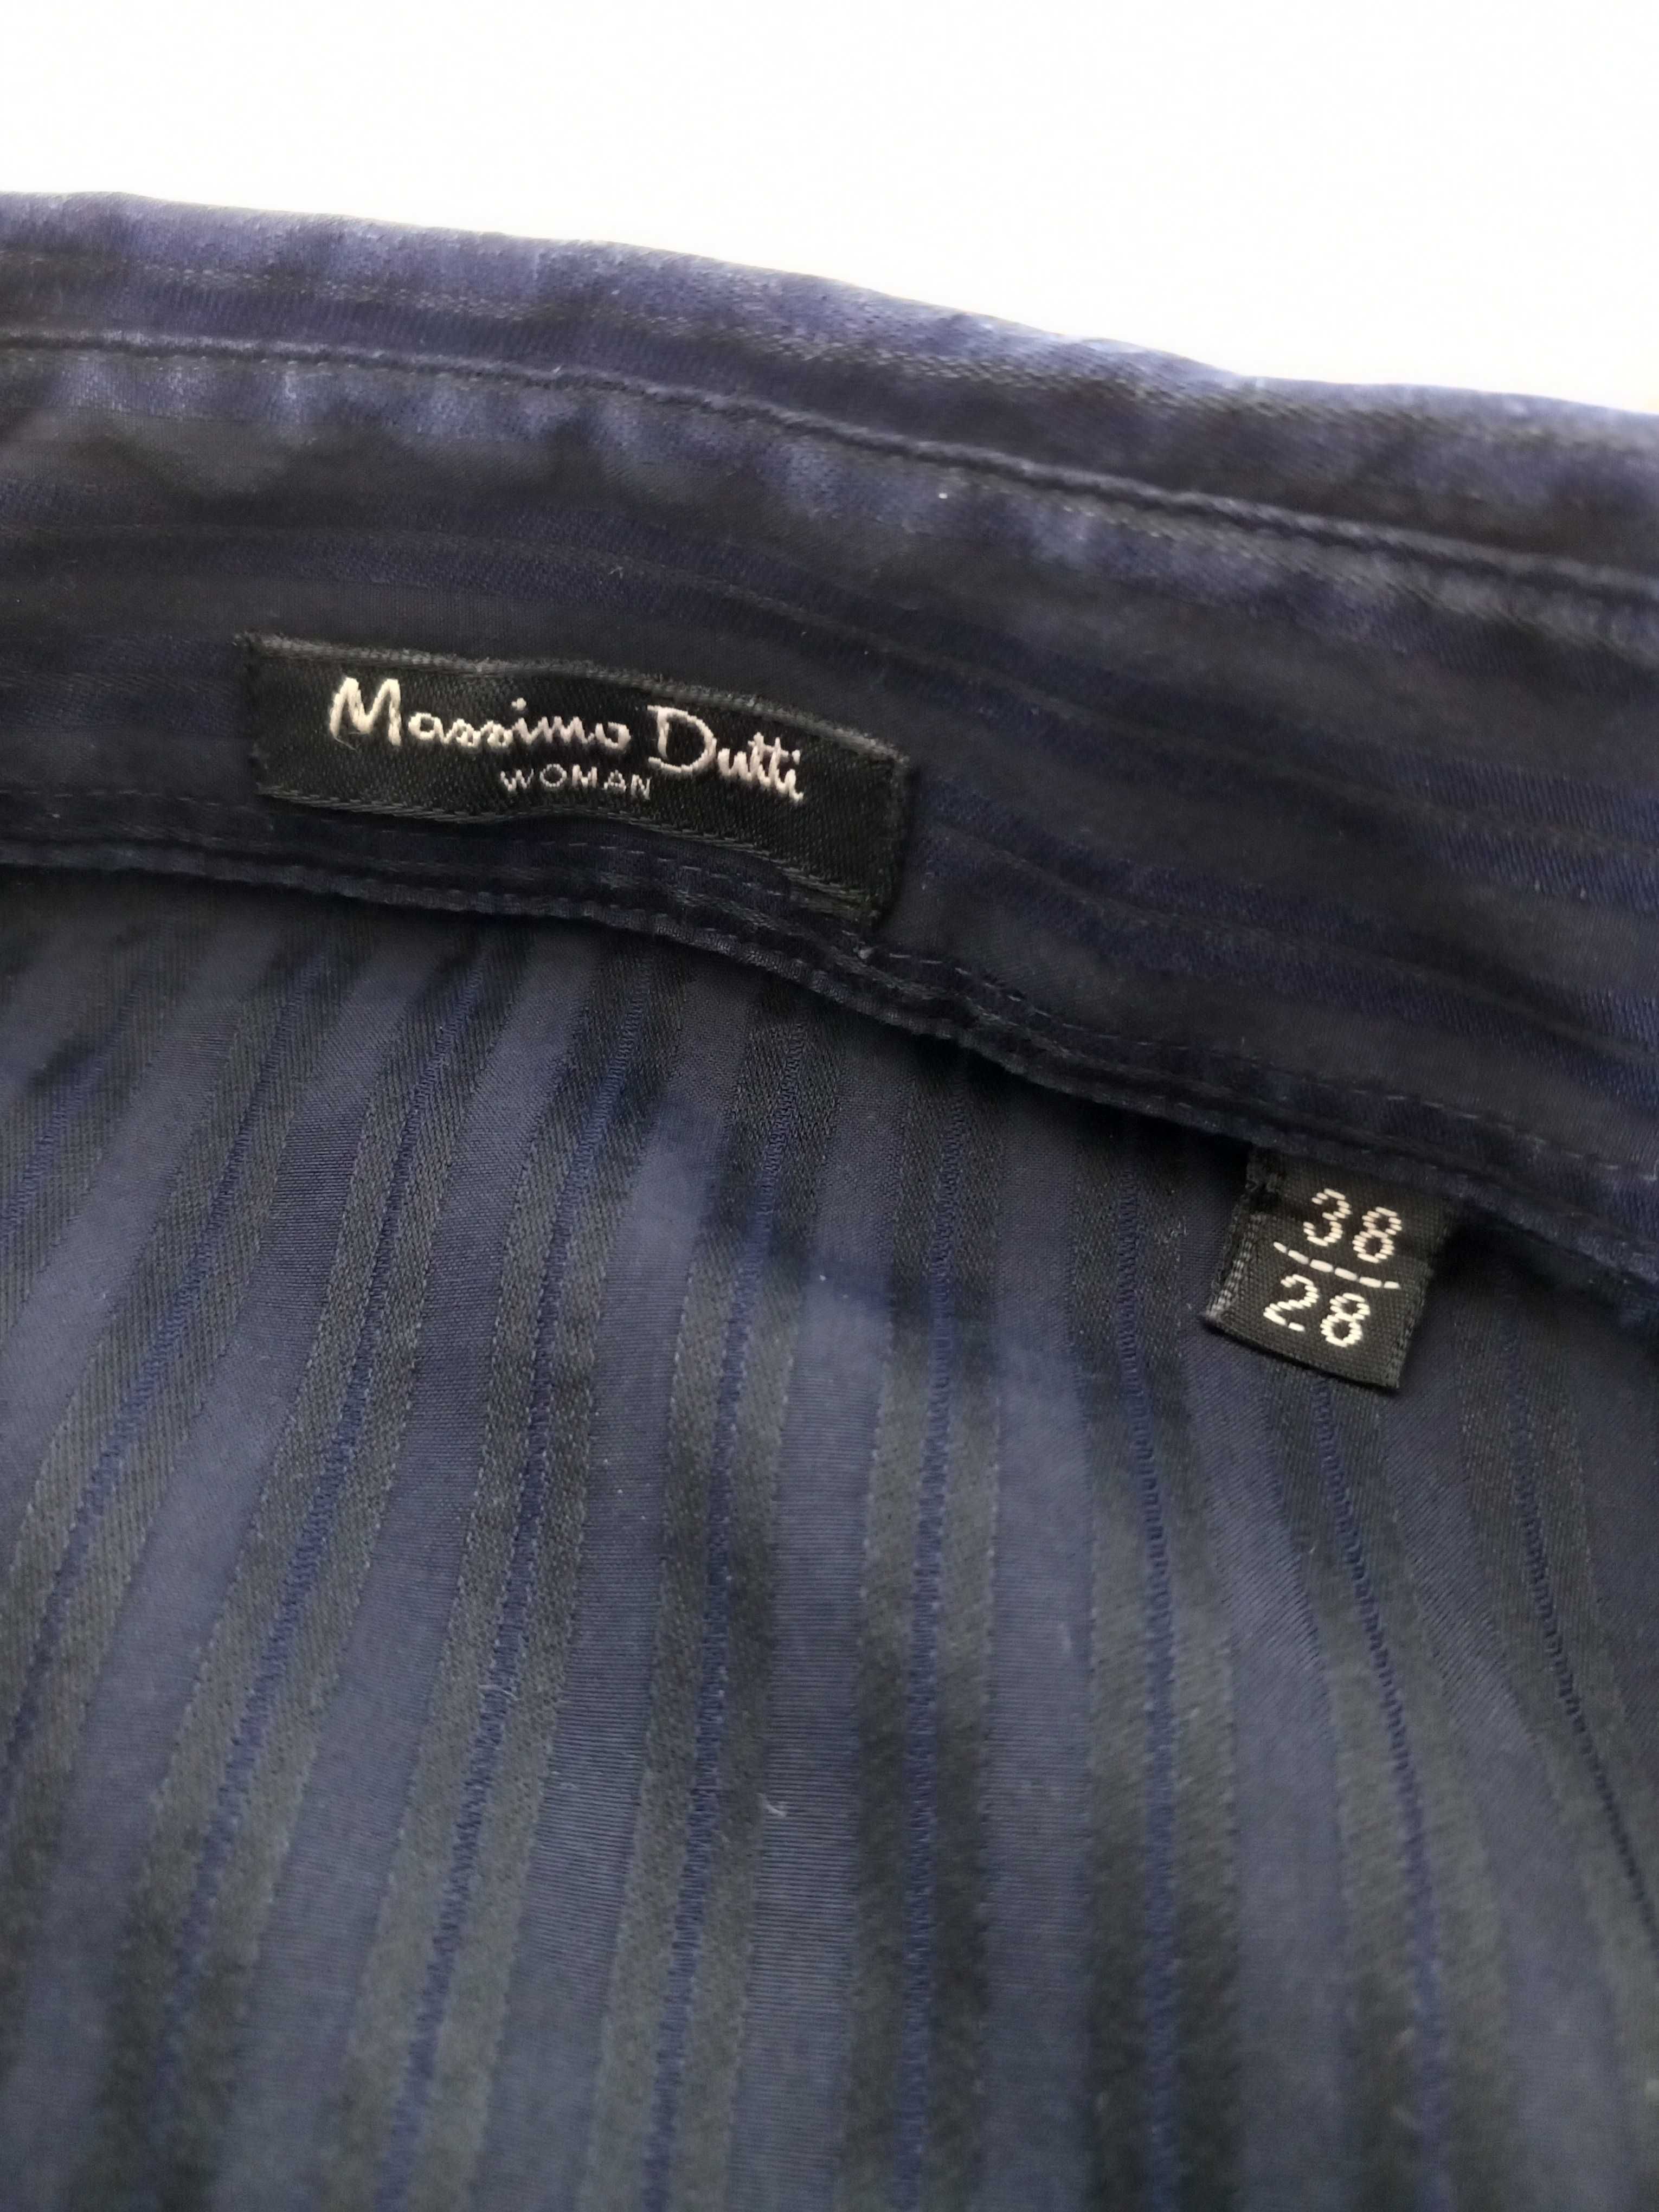 Camisas Massimo Dutti para senhora